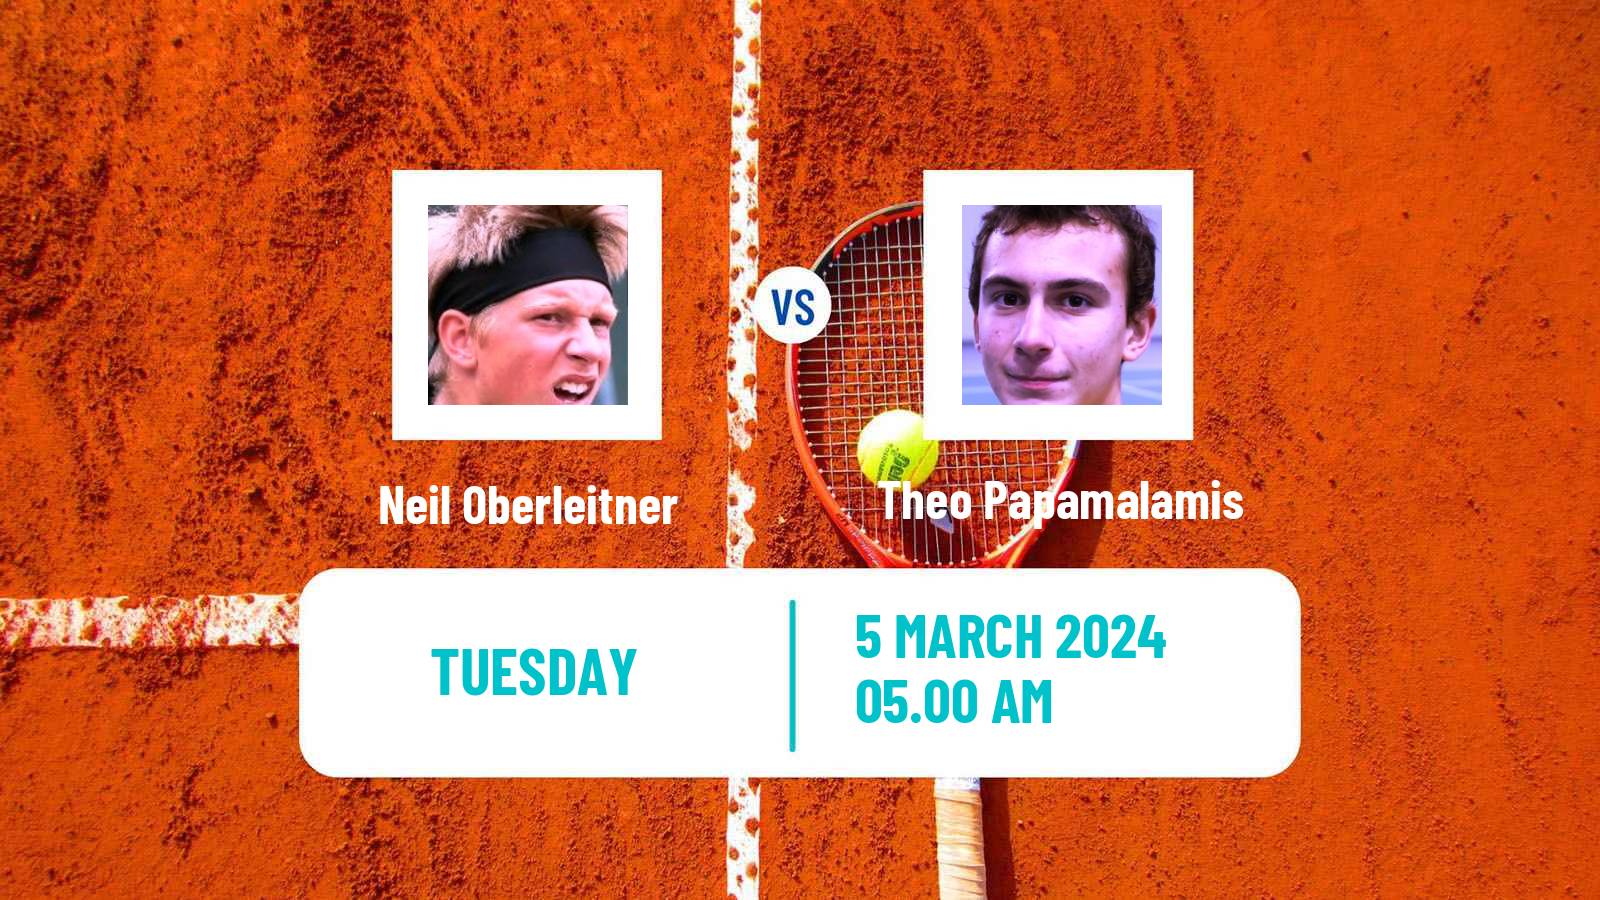 Tennis ITF M15 Poitiers Men Neil Oberleitner - Theo Papamalamis